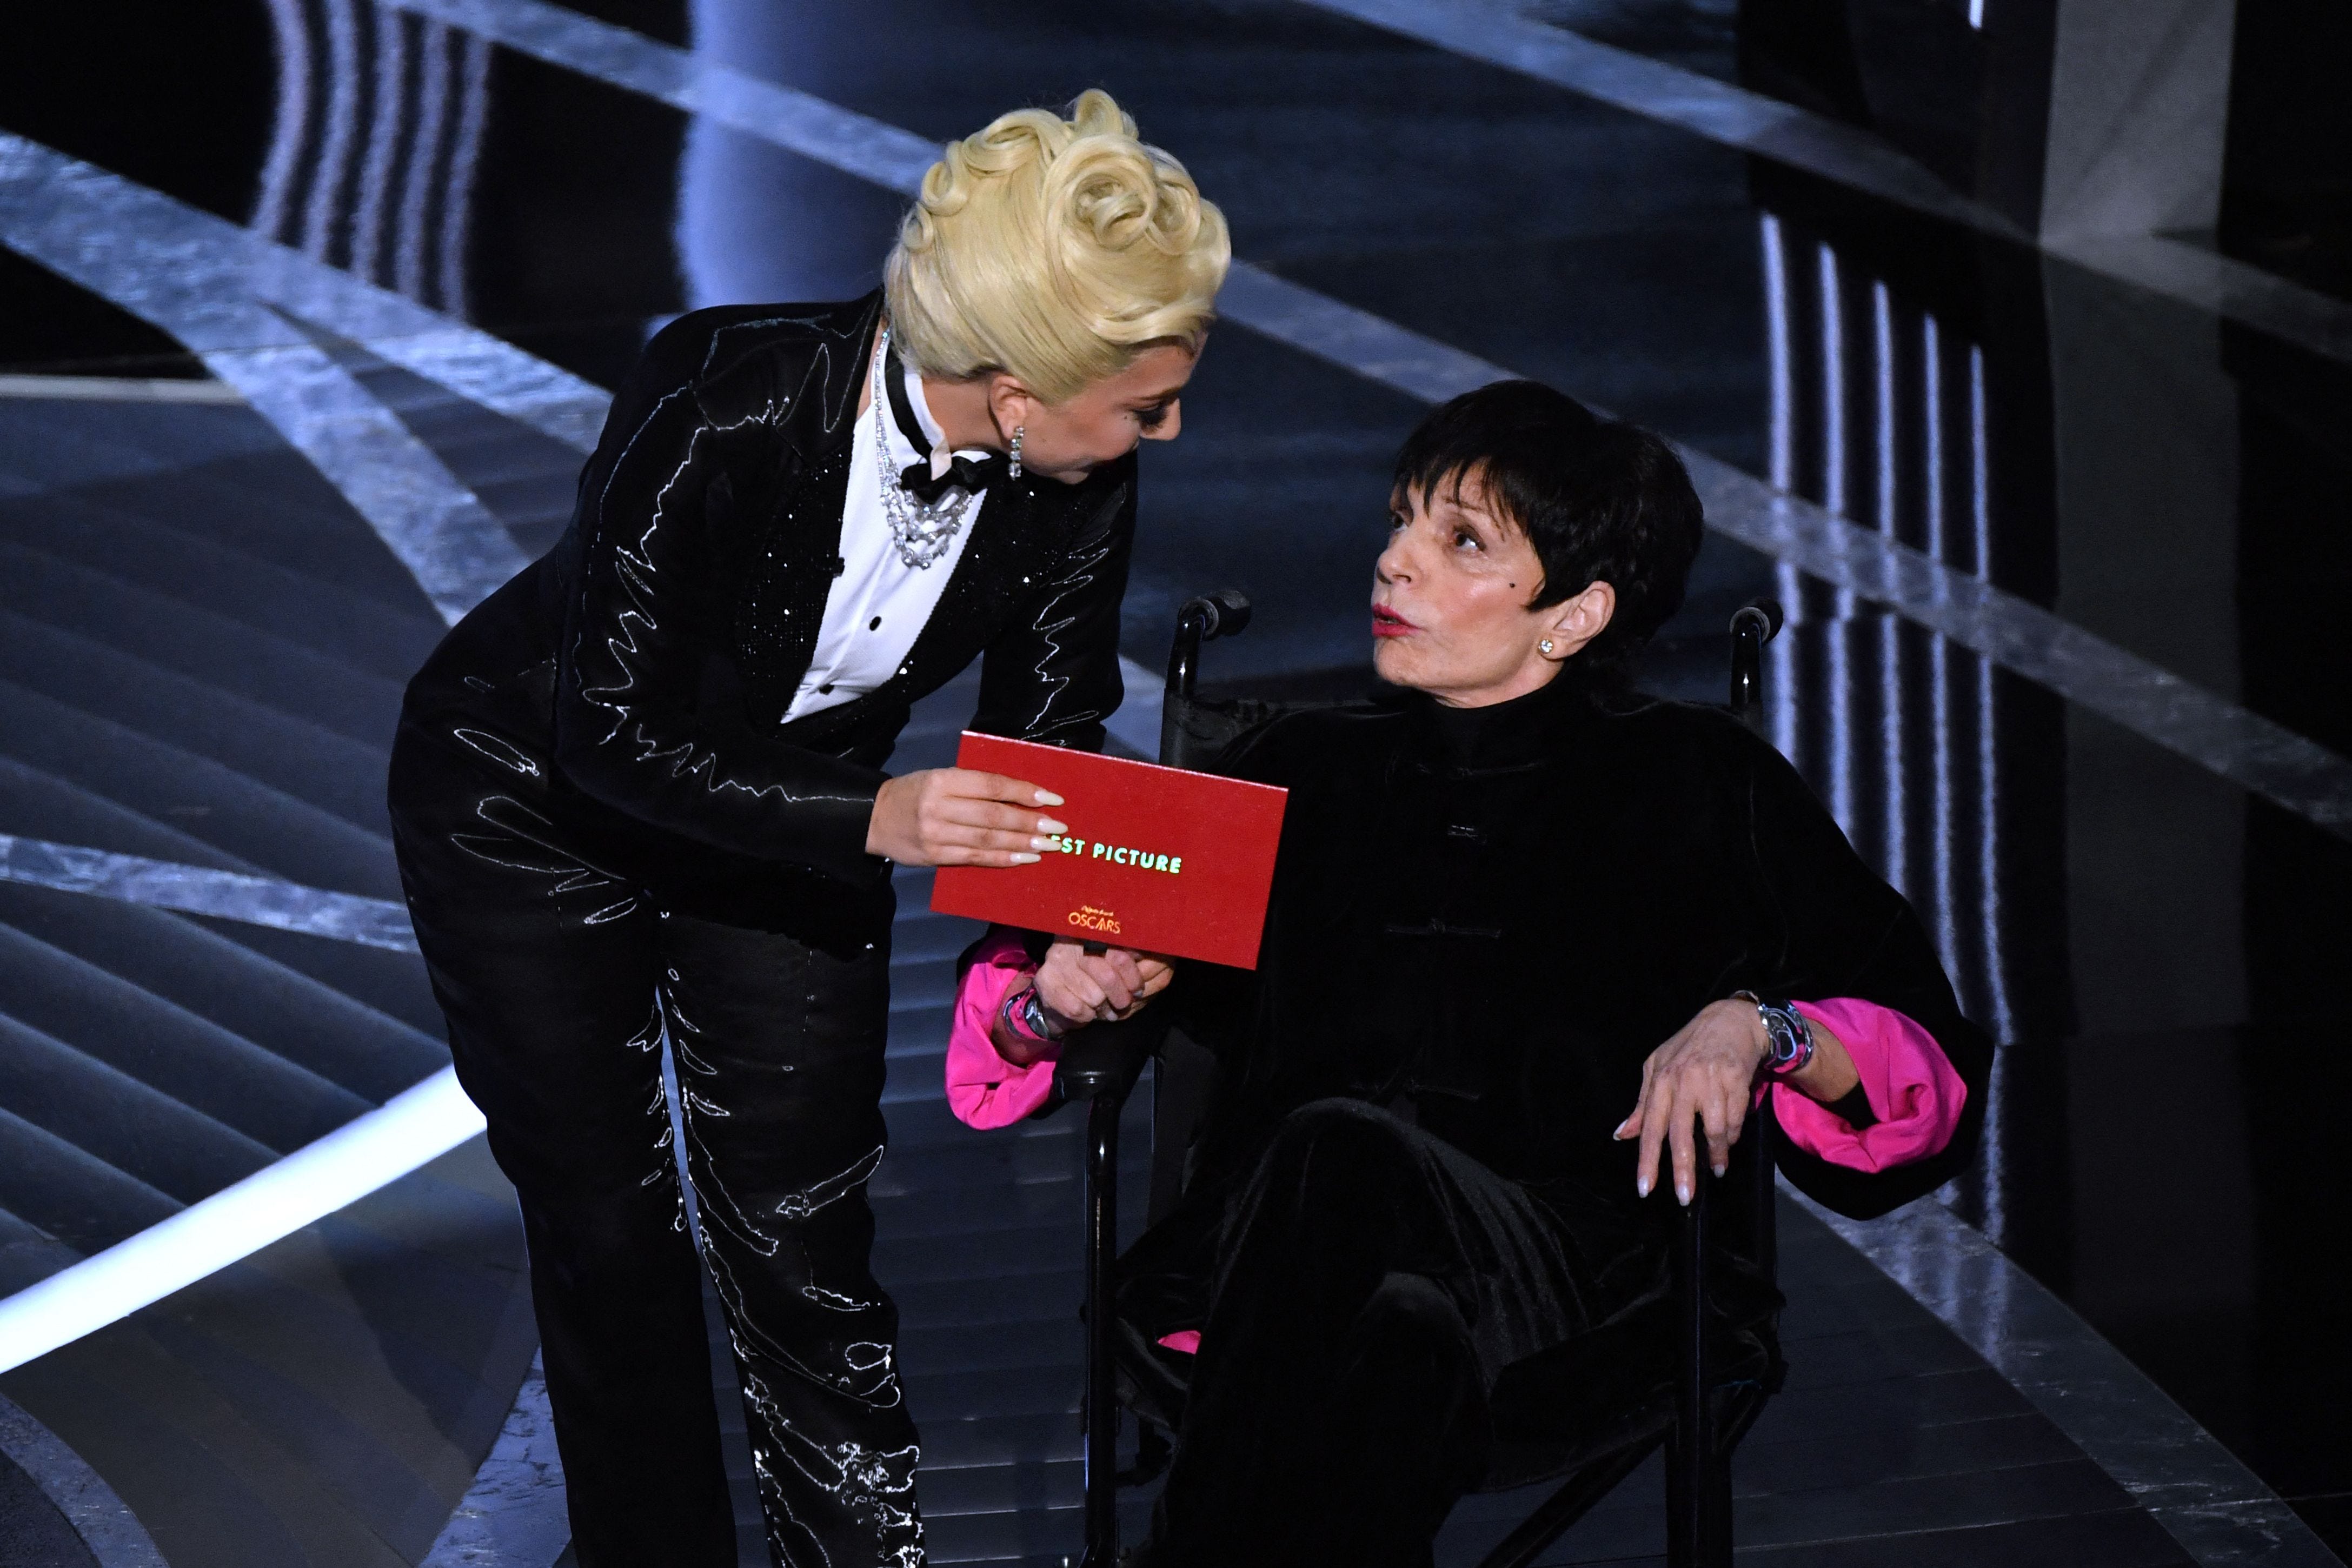 Liza Minnelli, Lady Gaga offer heart-warming Oscars moment amid chaos